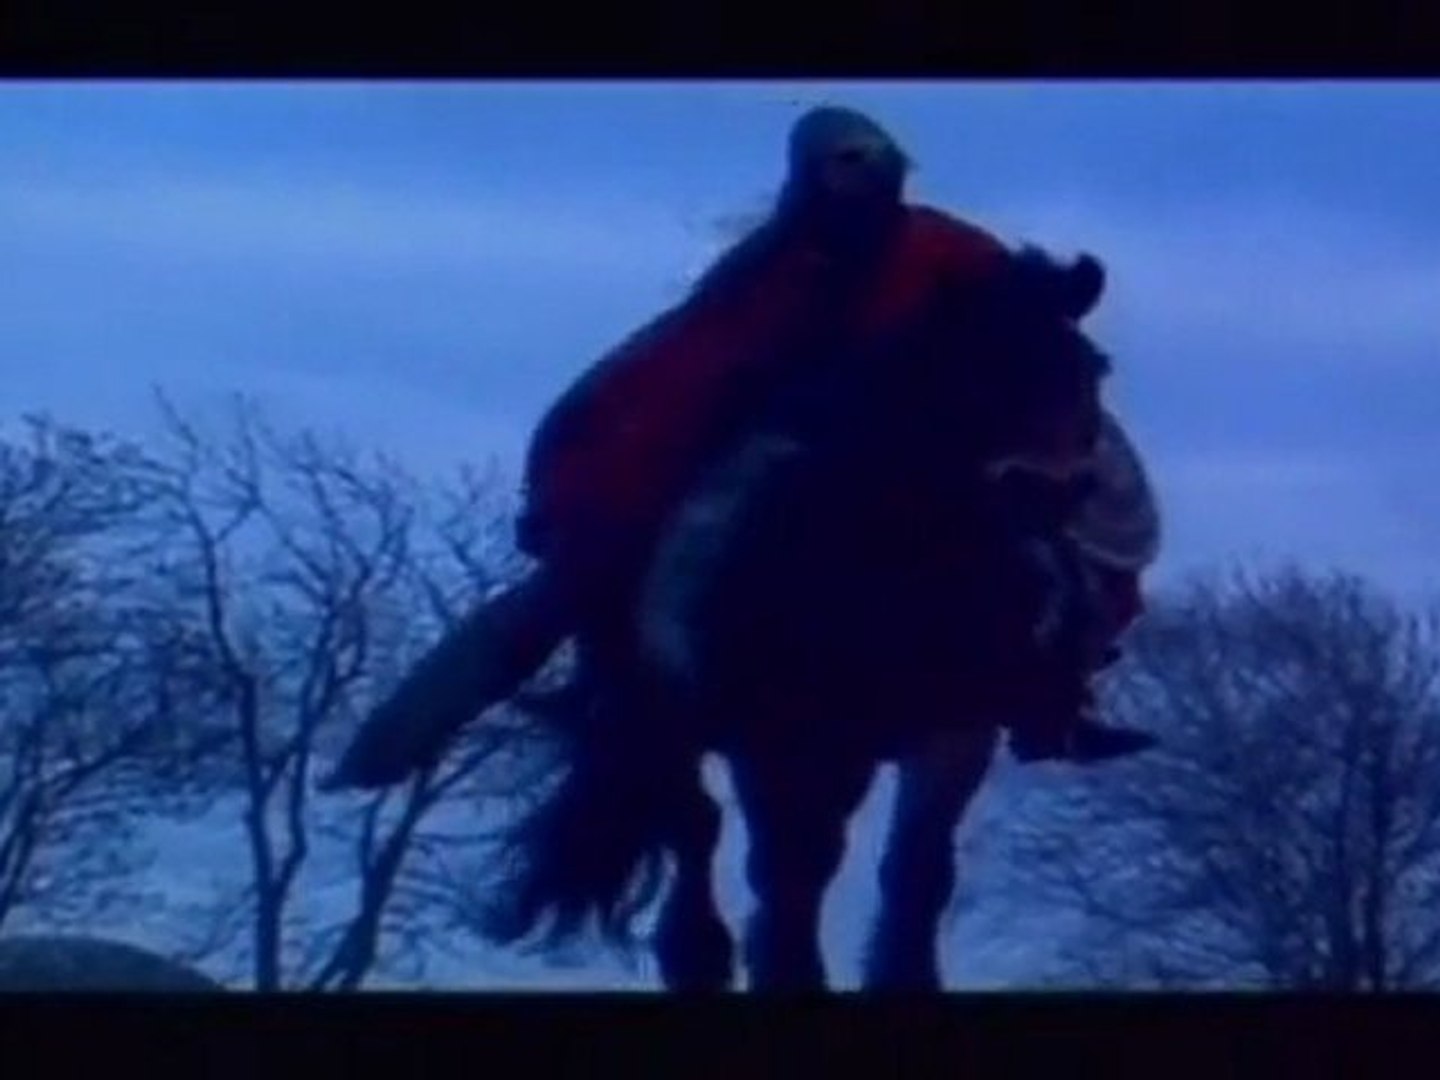 Bathory - One Rode To Asa Bay (1990) - video Dailymotion